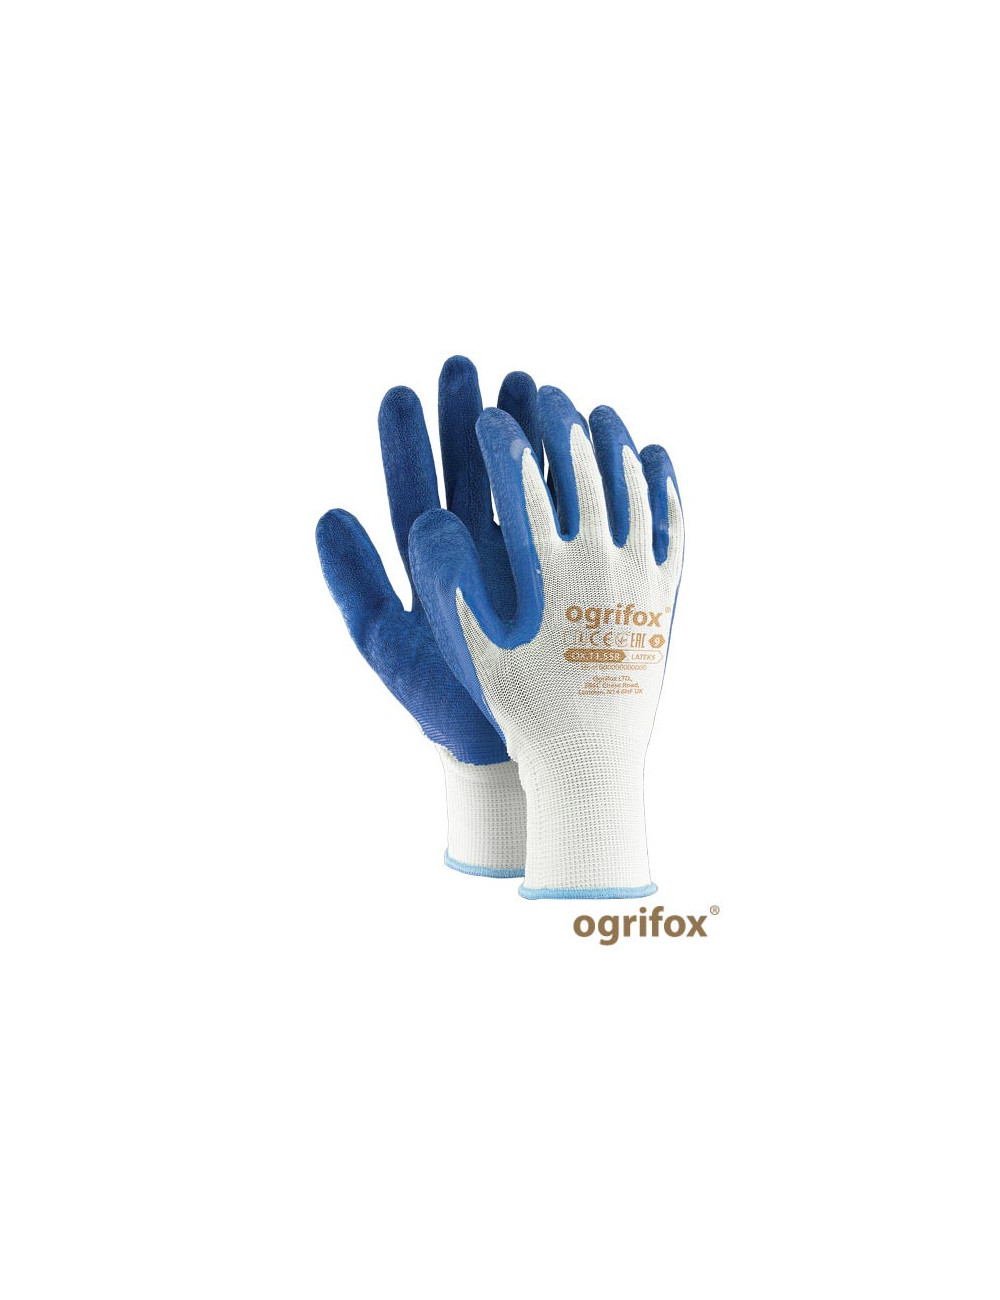 Schutzhandschuhe ox.11.558 latex ox-latex wn weiß und blau Ogrifox